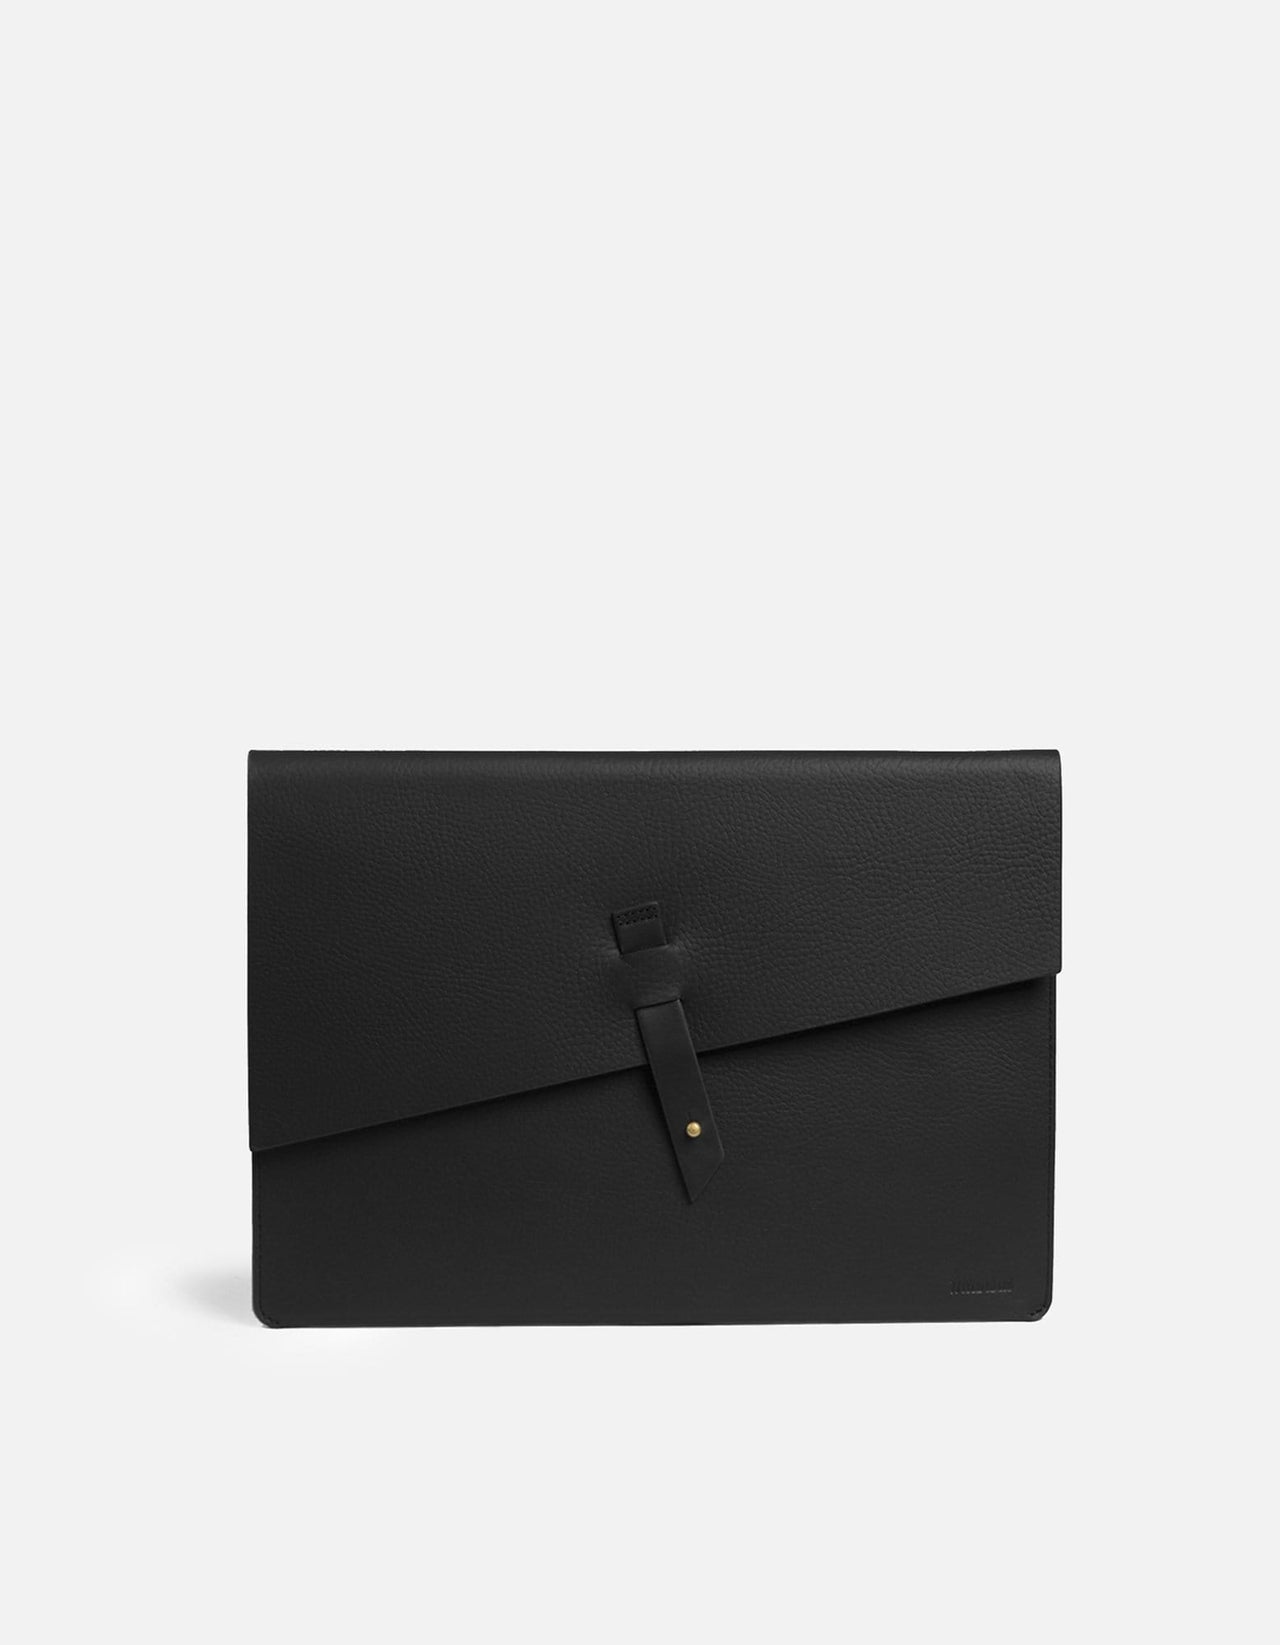 Portfolio, Textured Black, Men's Small Leather Goods